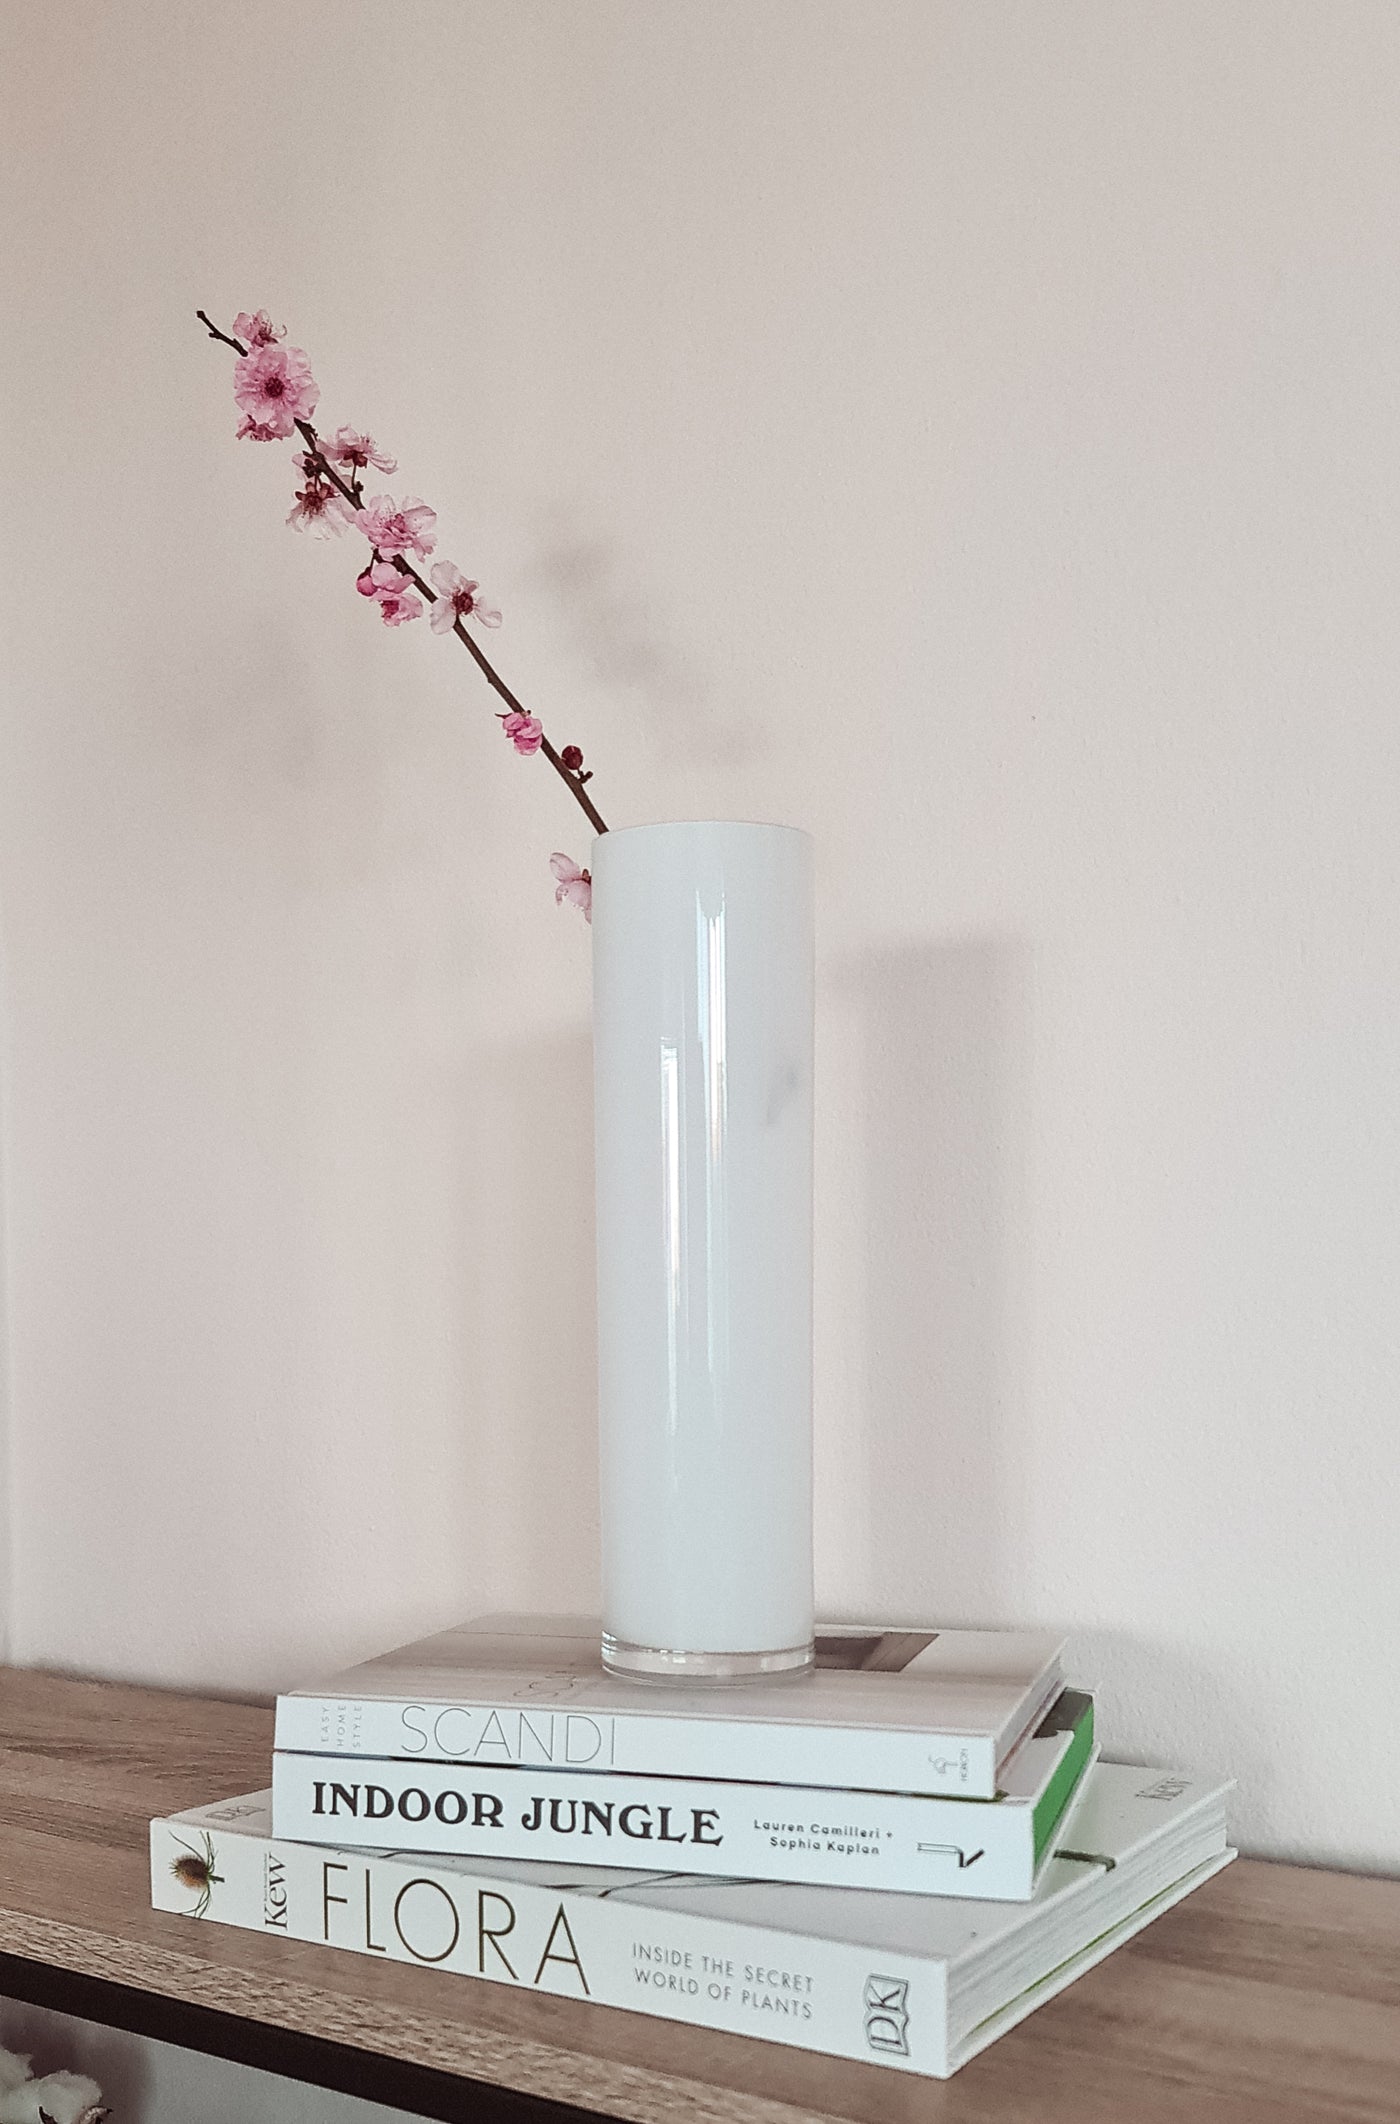 Opal Pillar Vase White (XL)